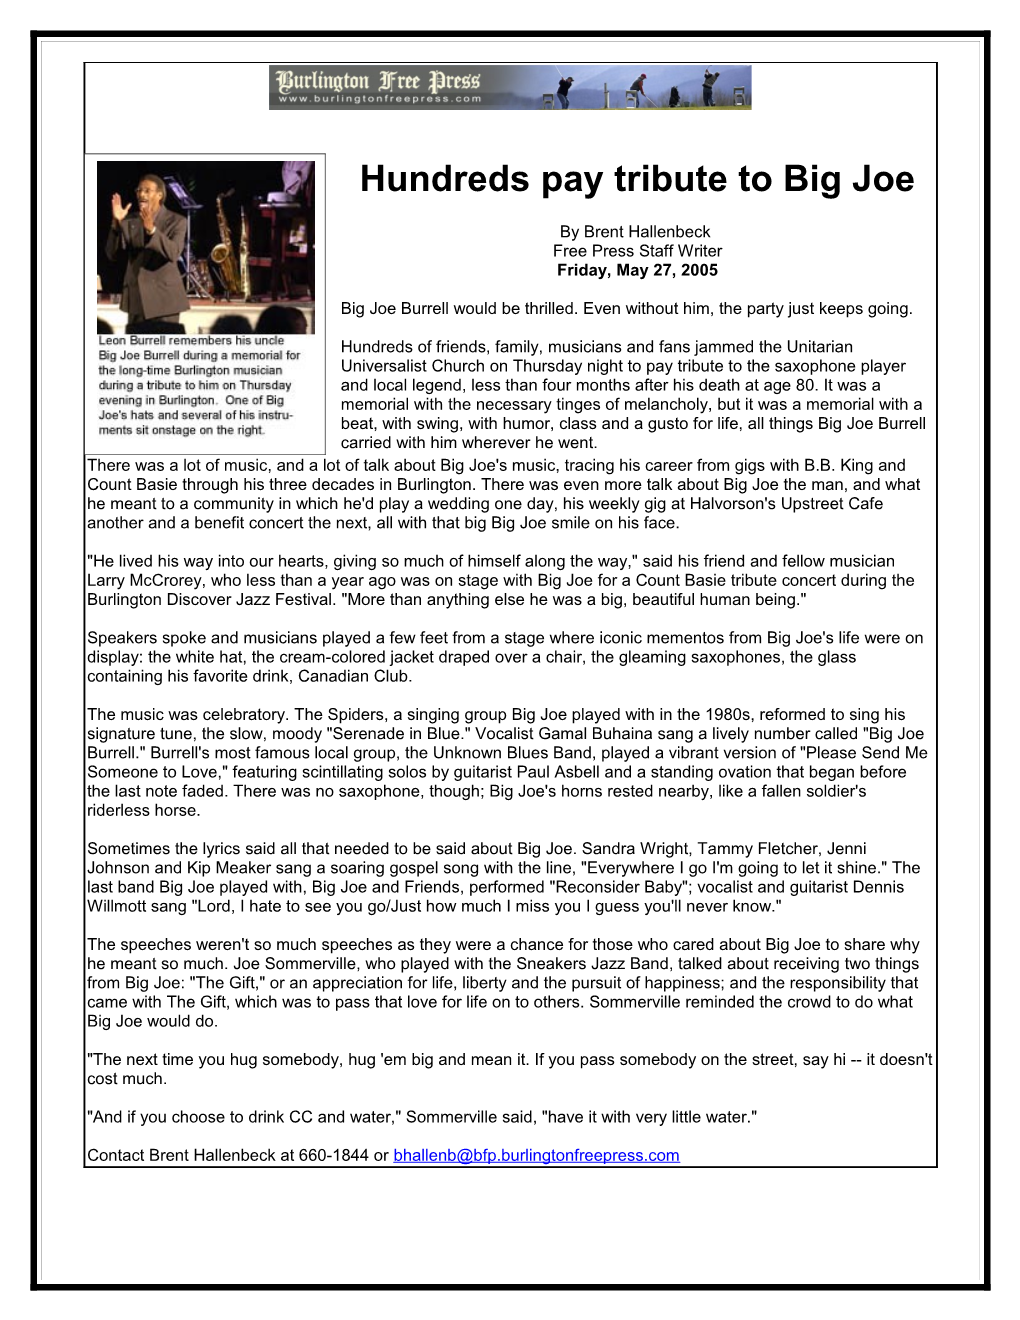 Hundreds Pay Tribute to Big Joe